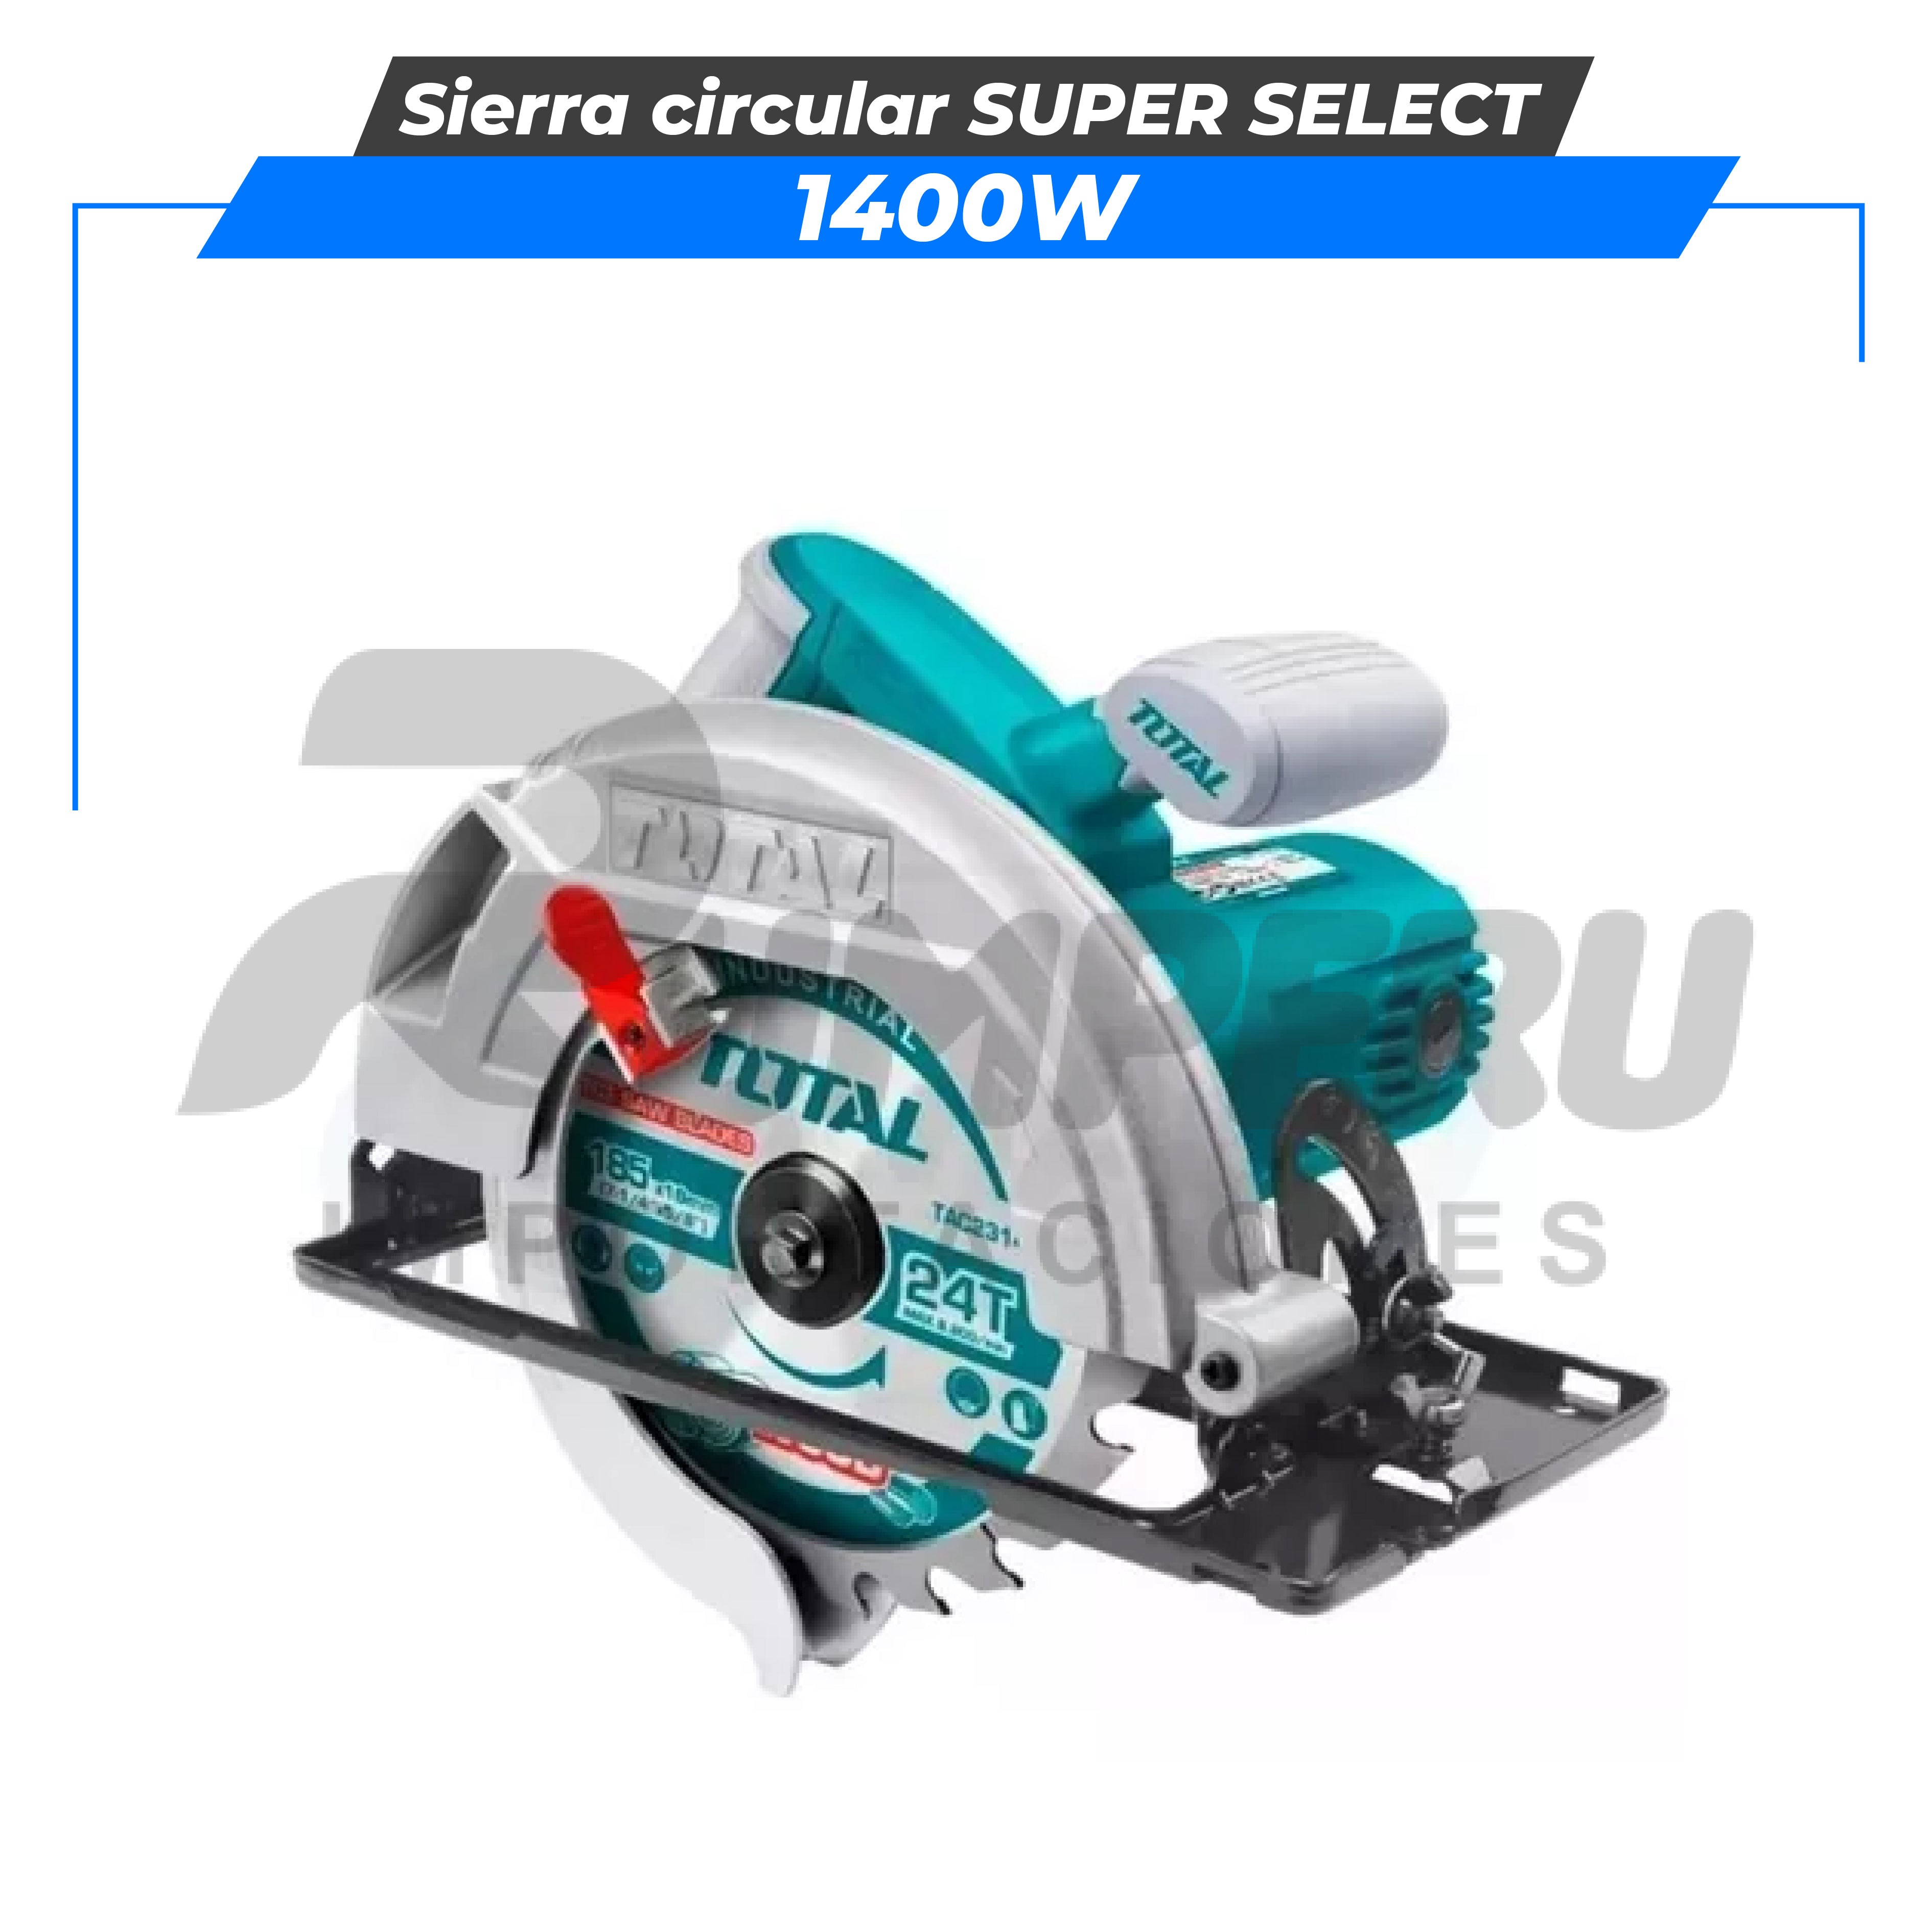 Sierra circular 1400W SUPER SELECT